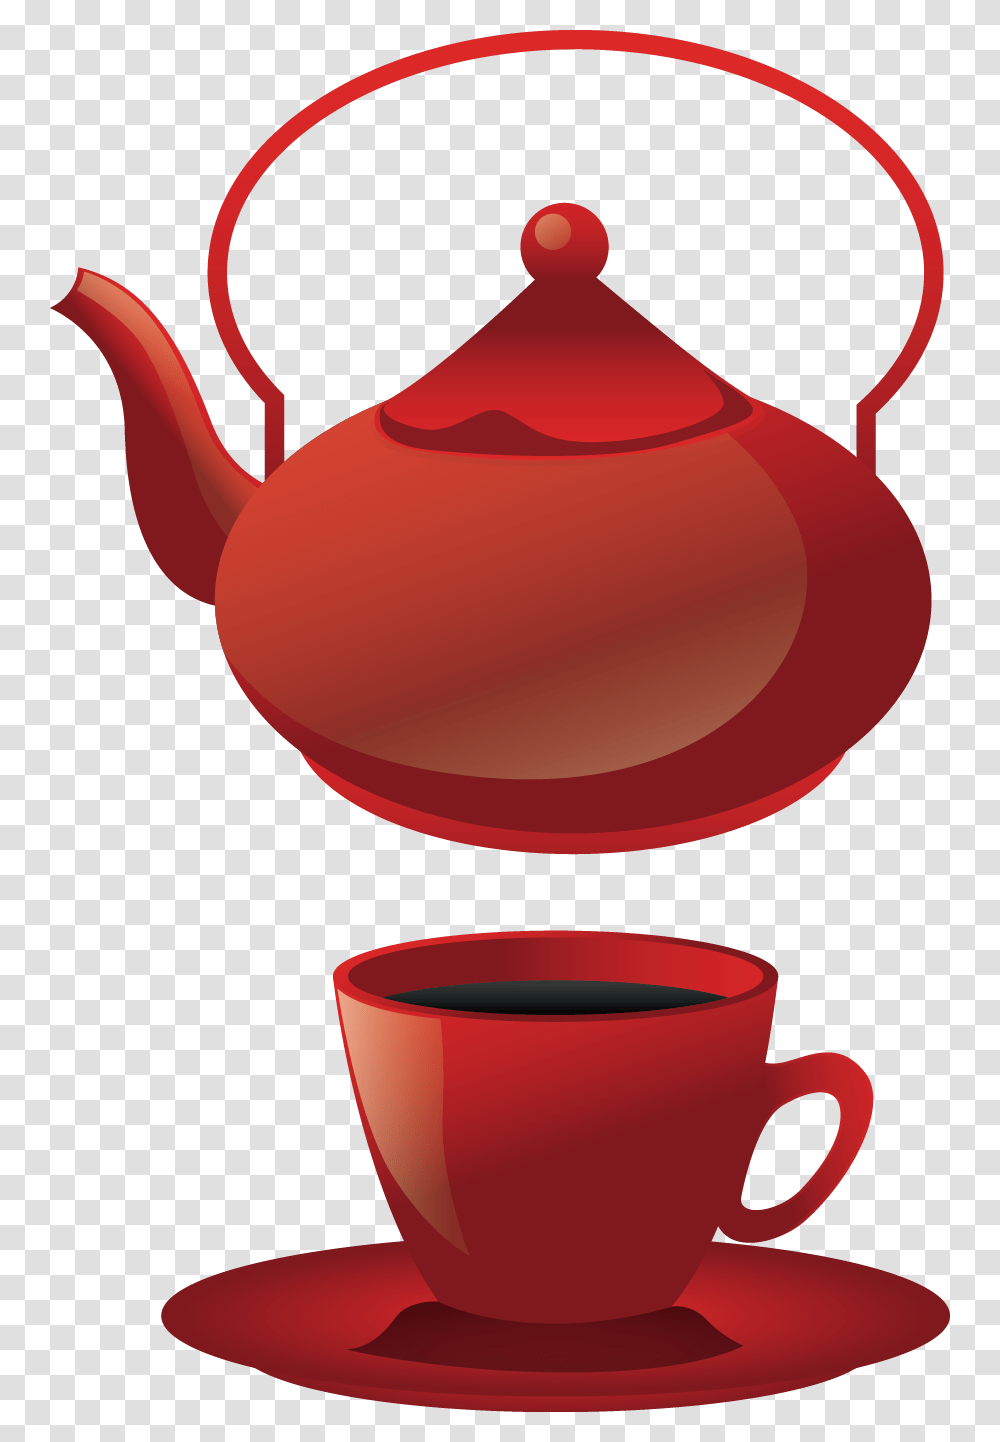 Teapot Coffee Cup Teacup Cup And Teapot Vector, Pottery, Lamp, Saucer Transparent Png